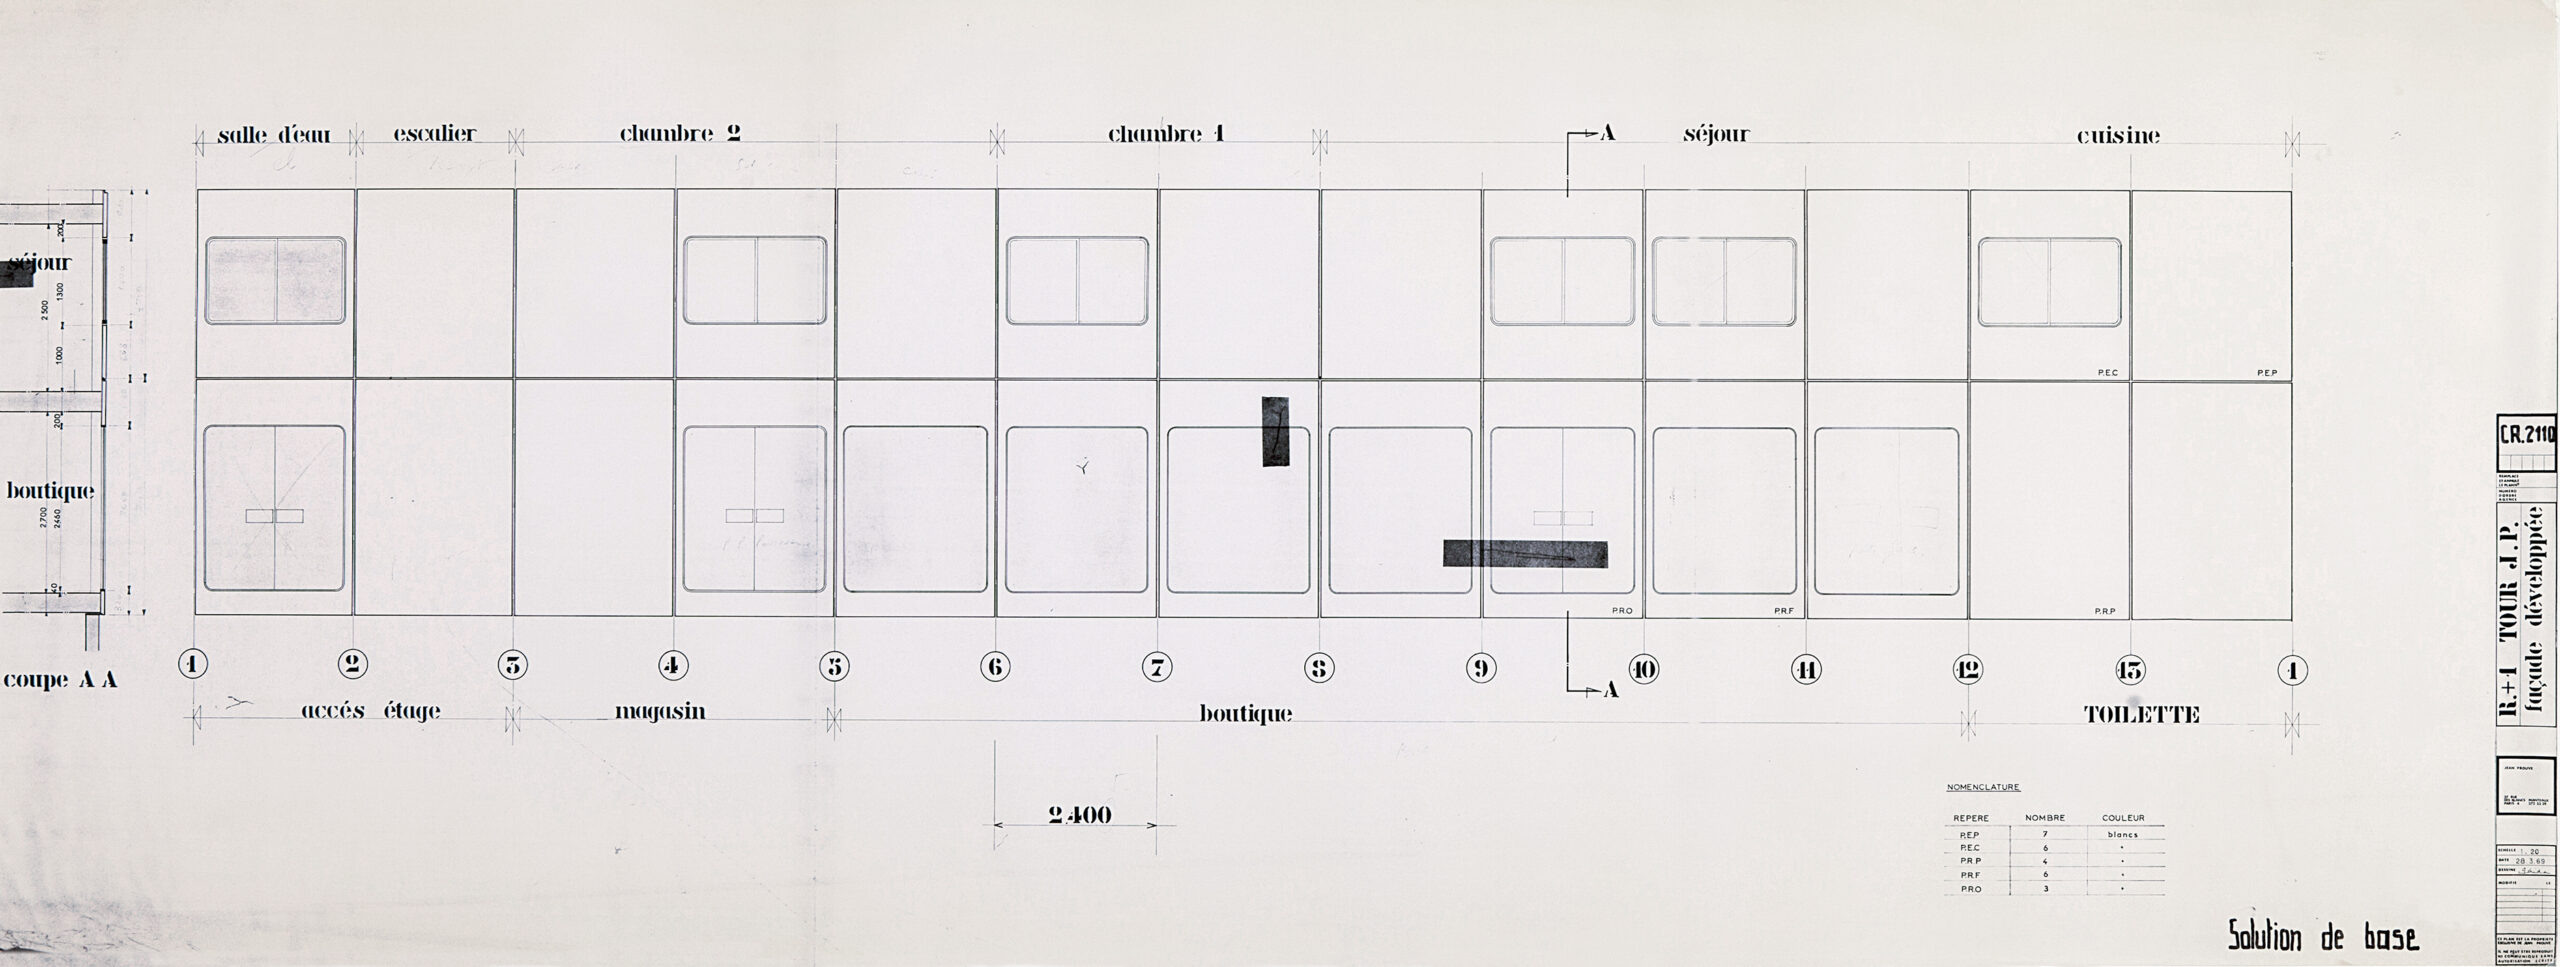 Atelier Jean Prouvé. “J. P. Tower, two-story model, developed elevation”, plan CR 2110, 28 March 1969.